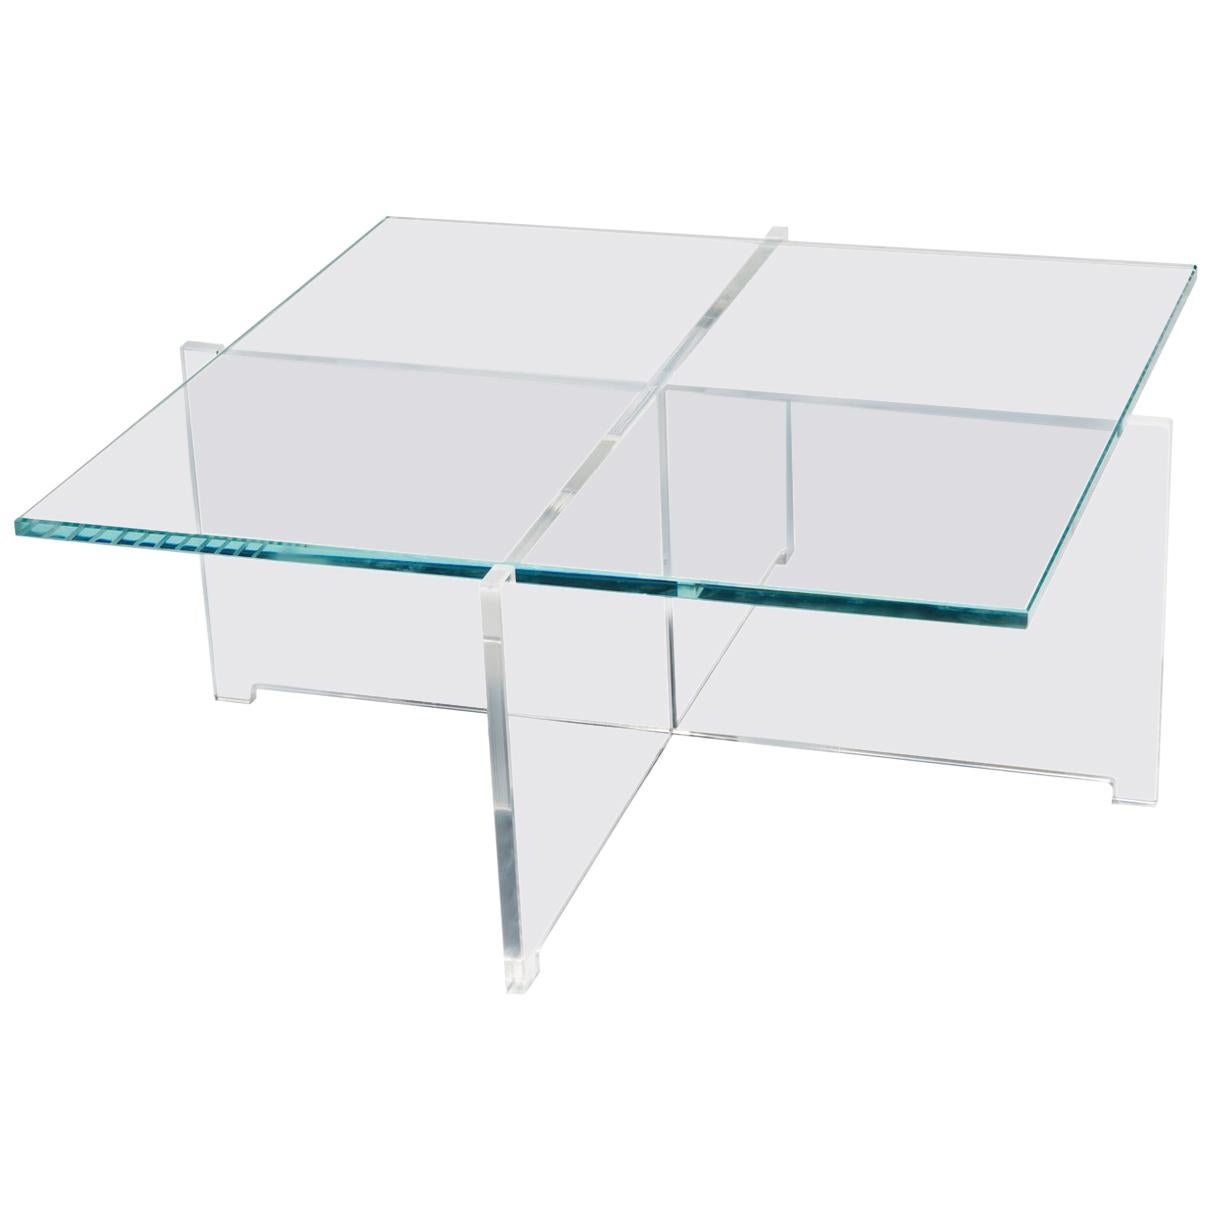 Bodil Kjær 'Crossplex Low Table', Polycarbonate and Glass by Karakter For Sale